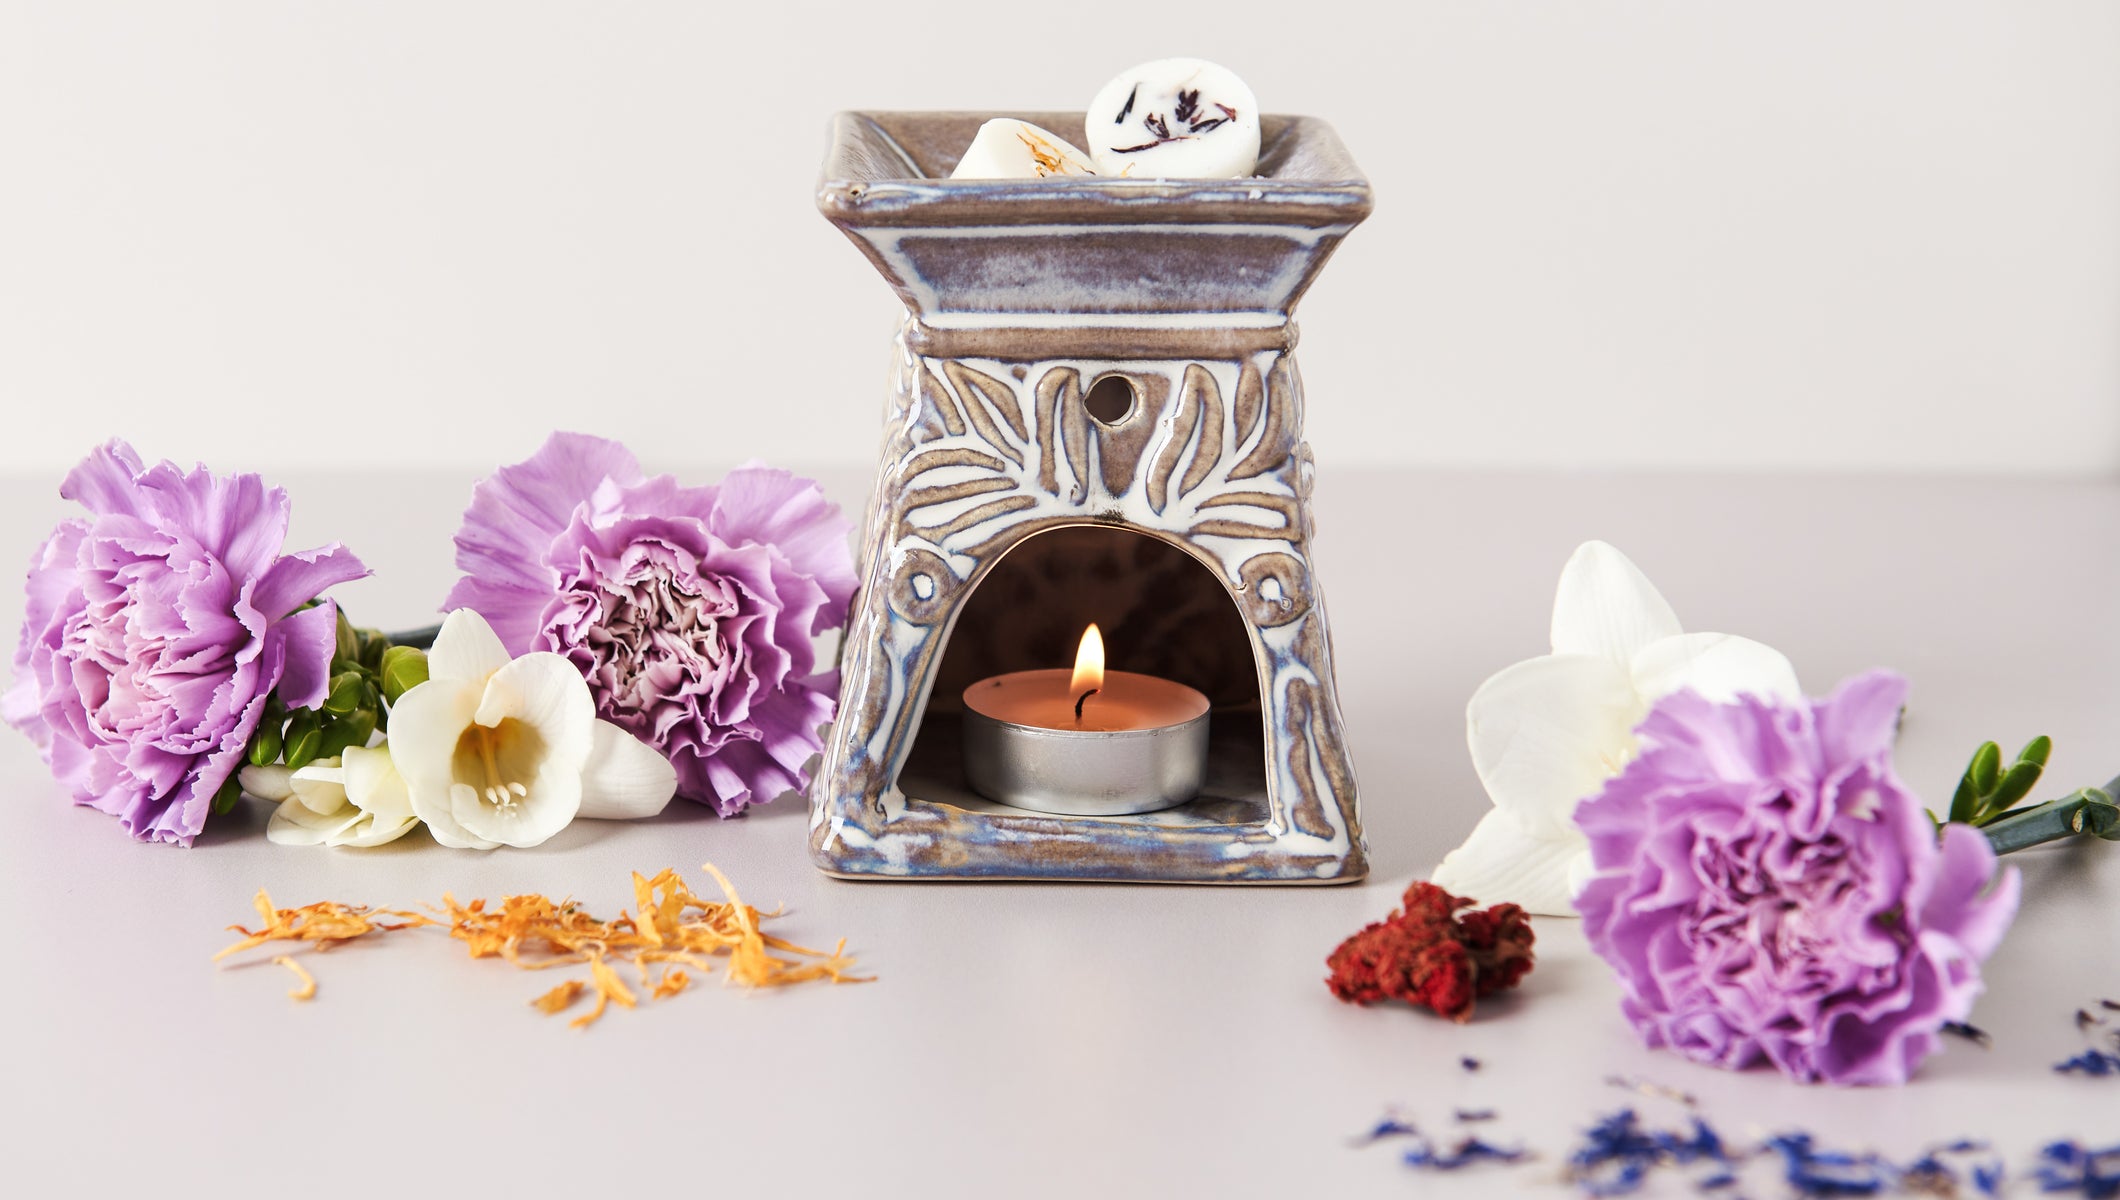 Frankincense & Myrrh Botanical Luxury Soy Wax Melt